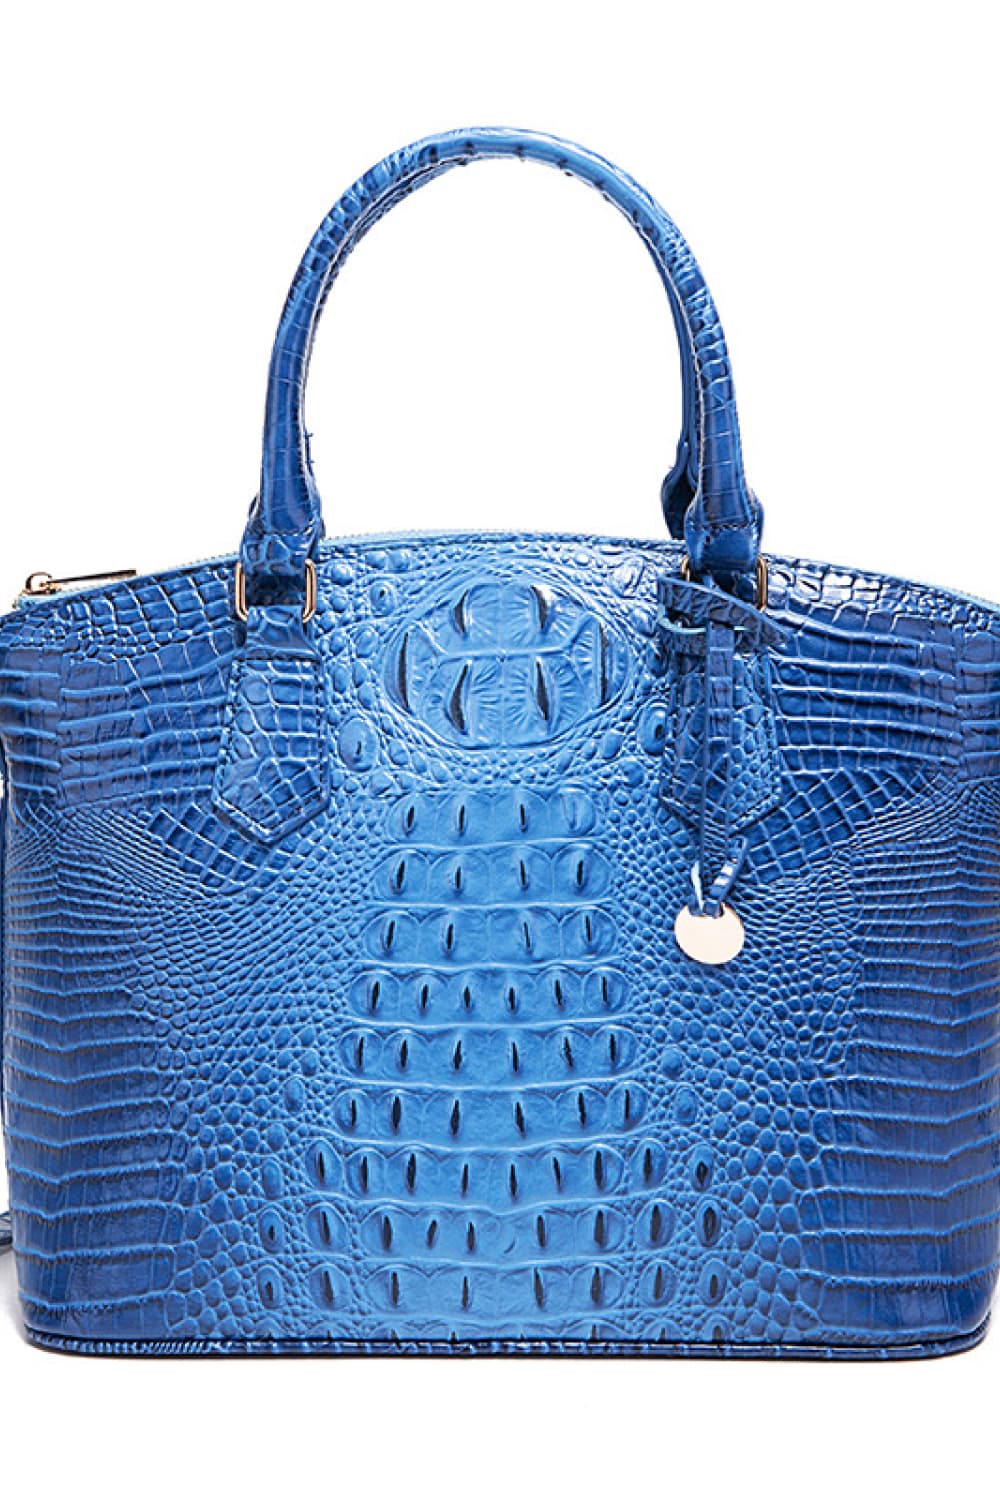 PU Leather Croc Handbag